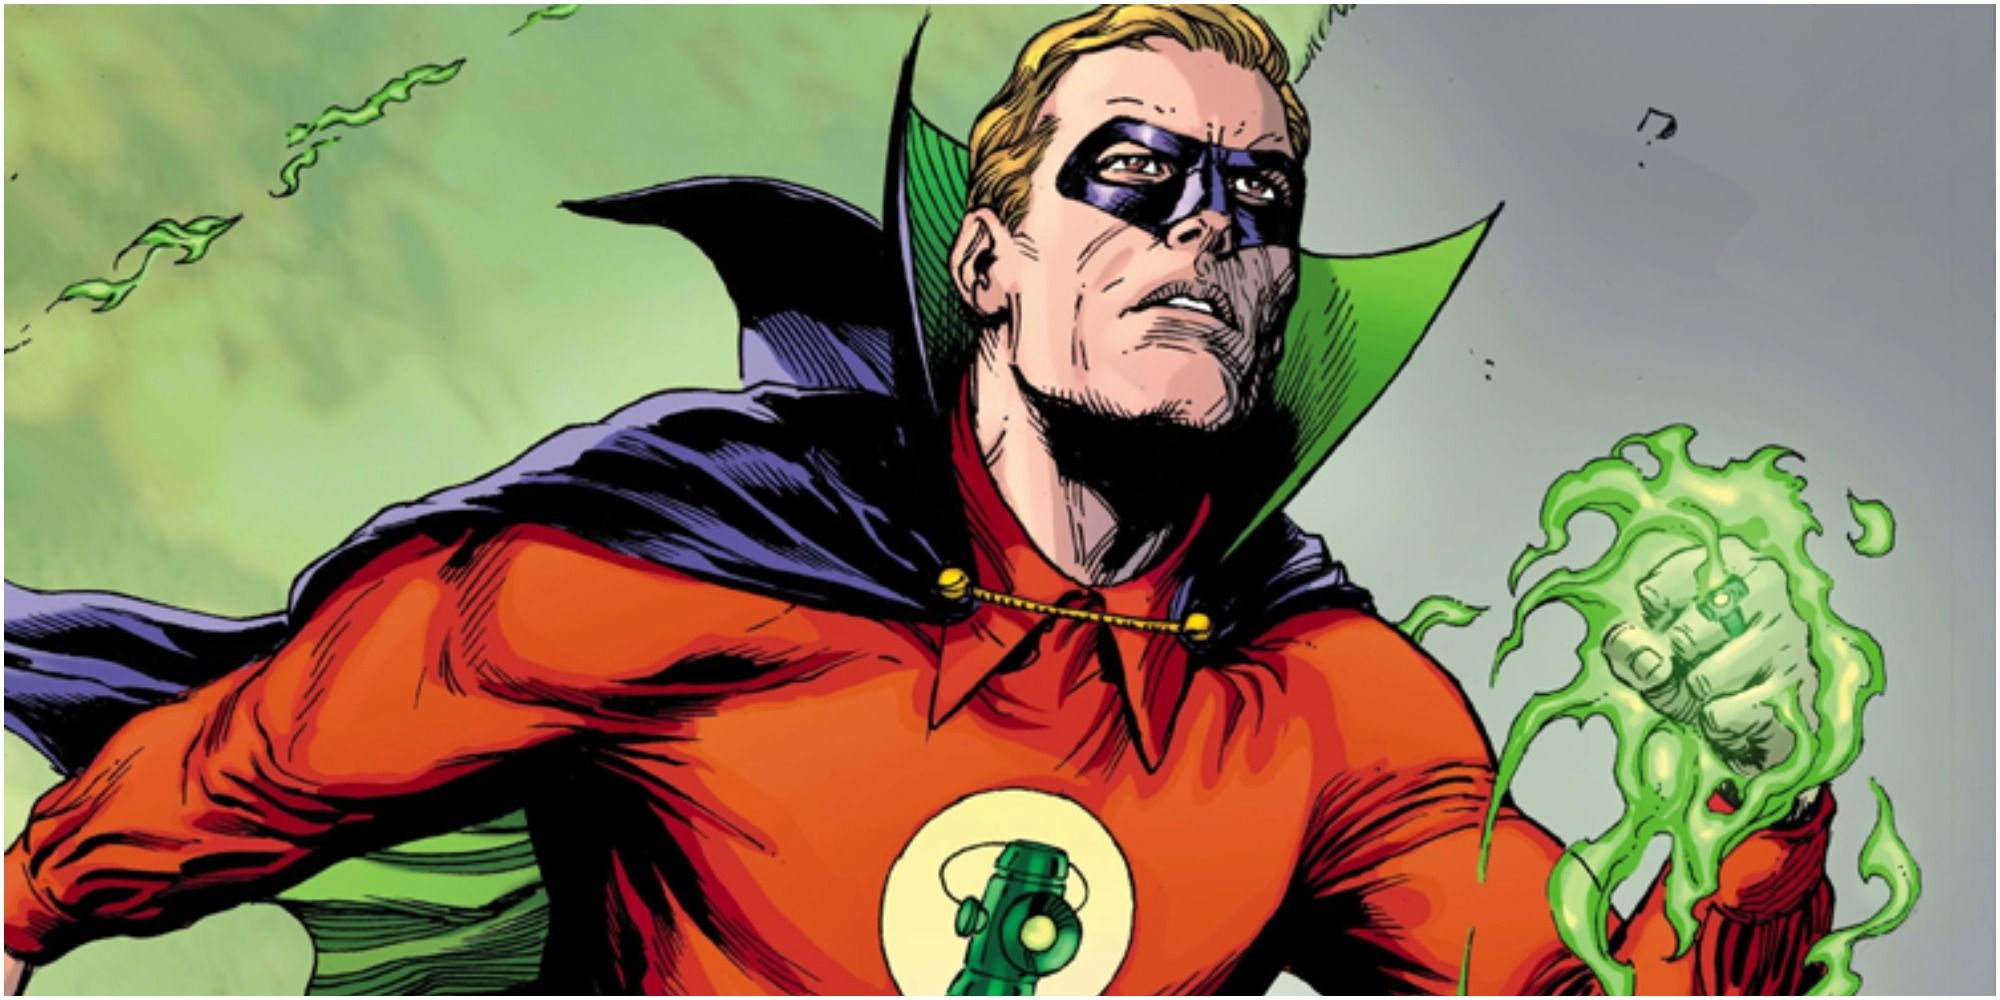 DC Superhero - Original Green Lantern and JSA member Alan Scott.